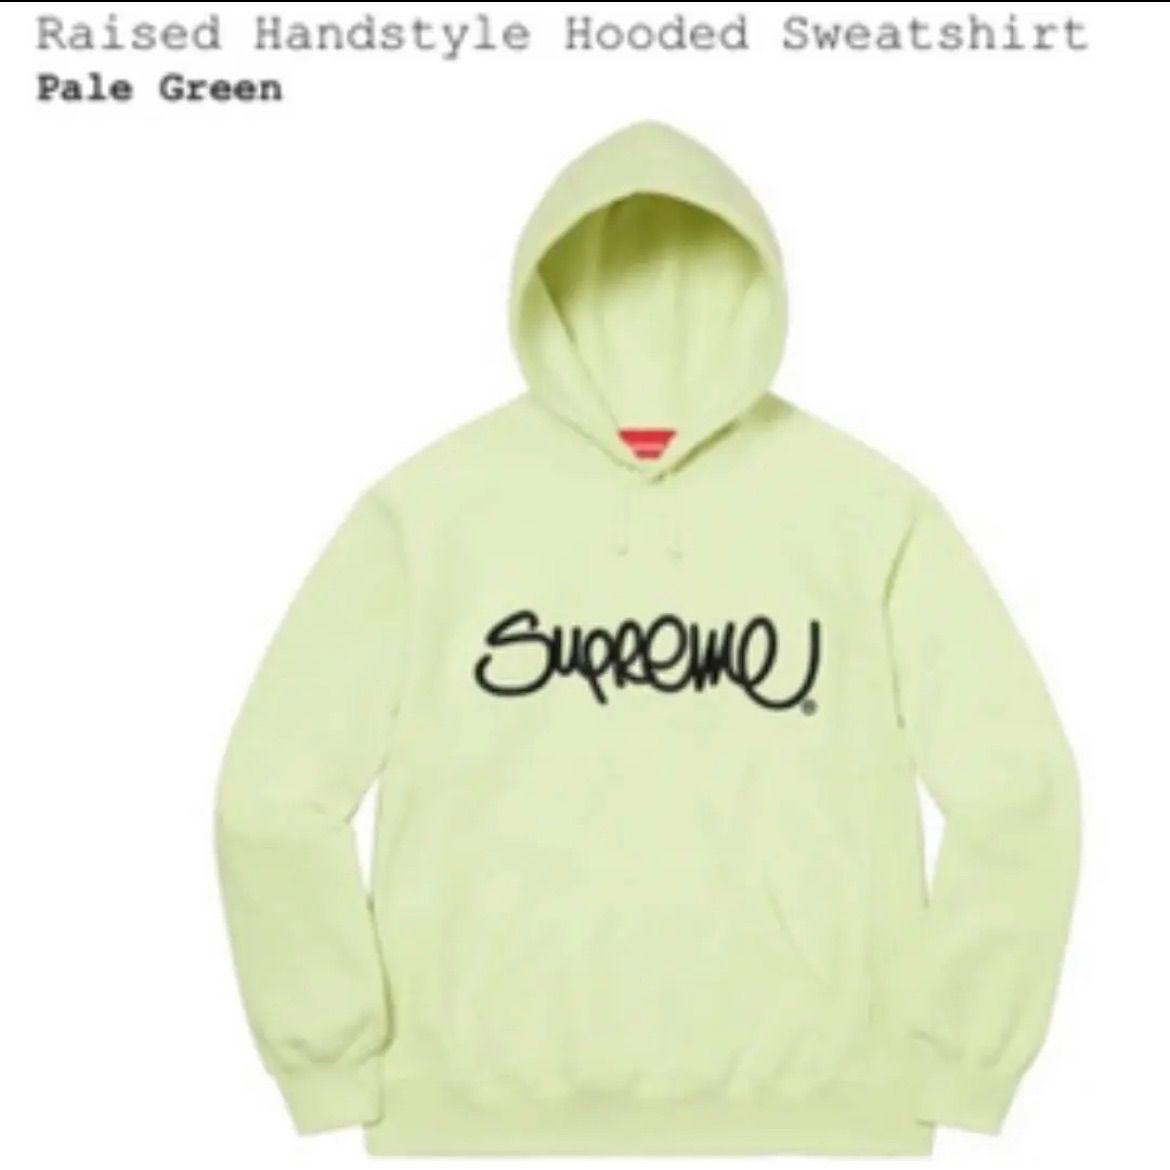 Lサイズ Raised Handstyle Hooded Sweatshirt